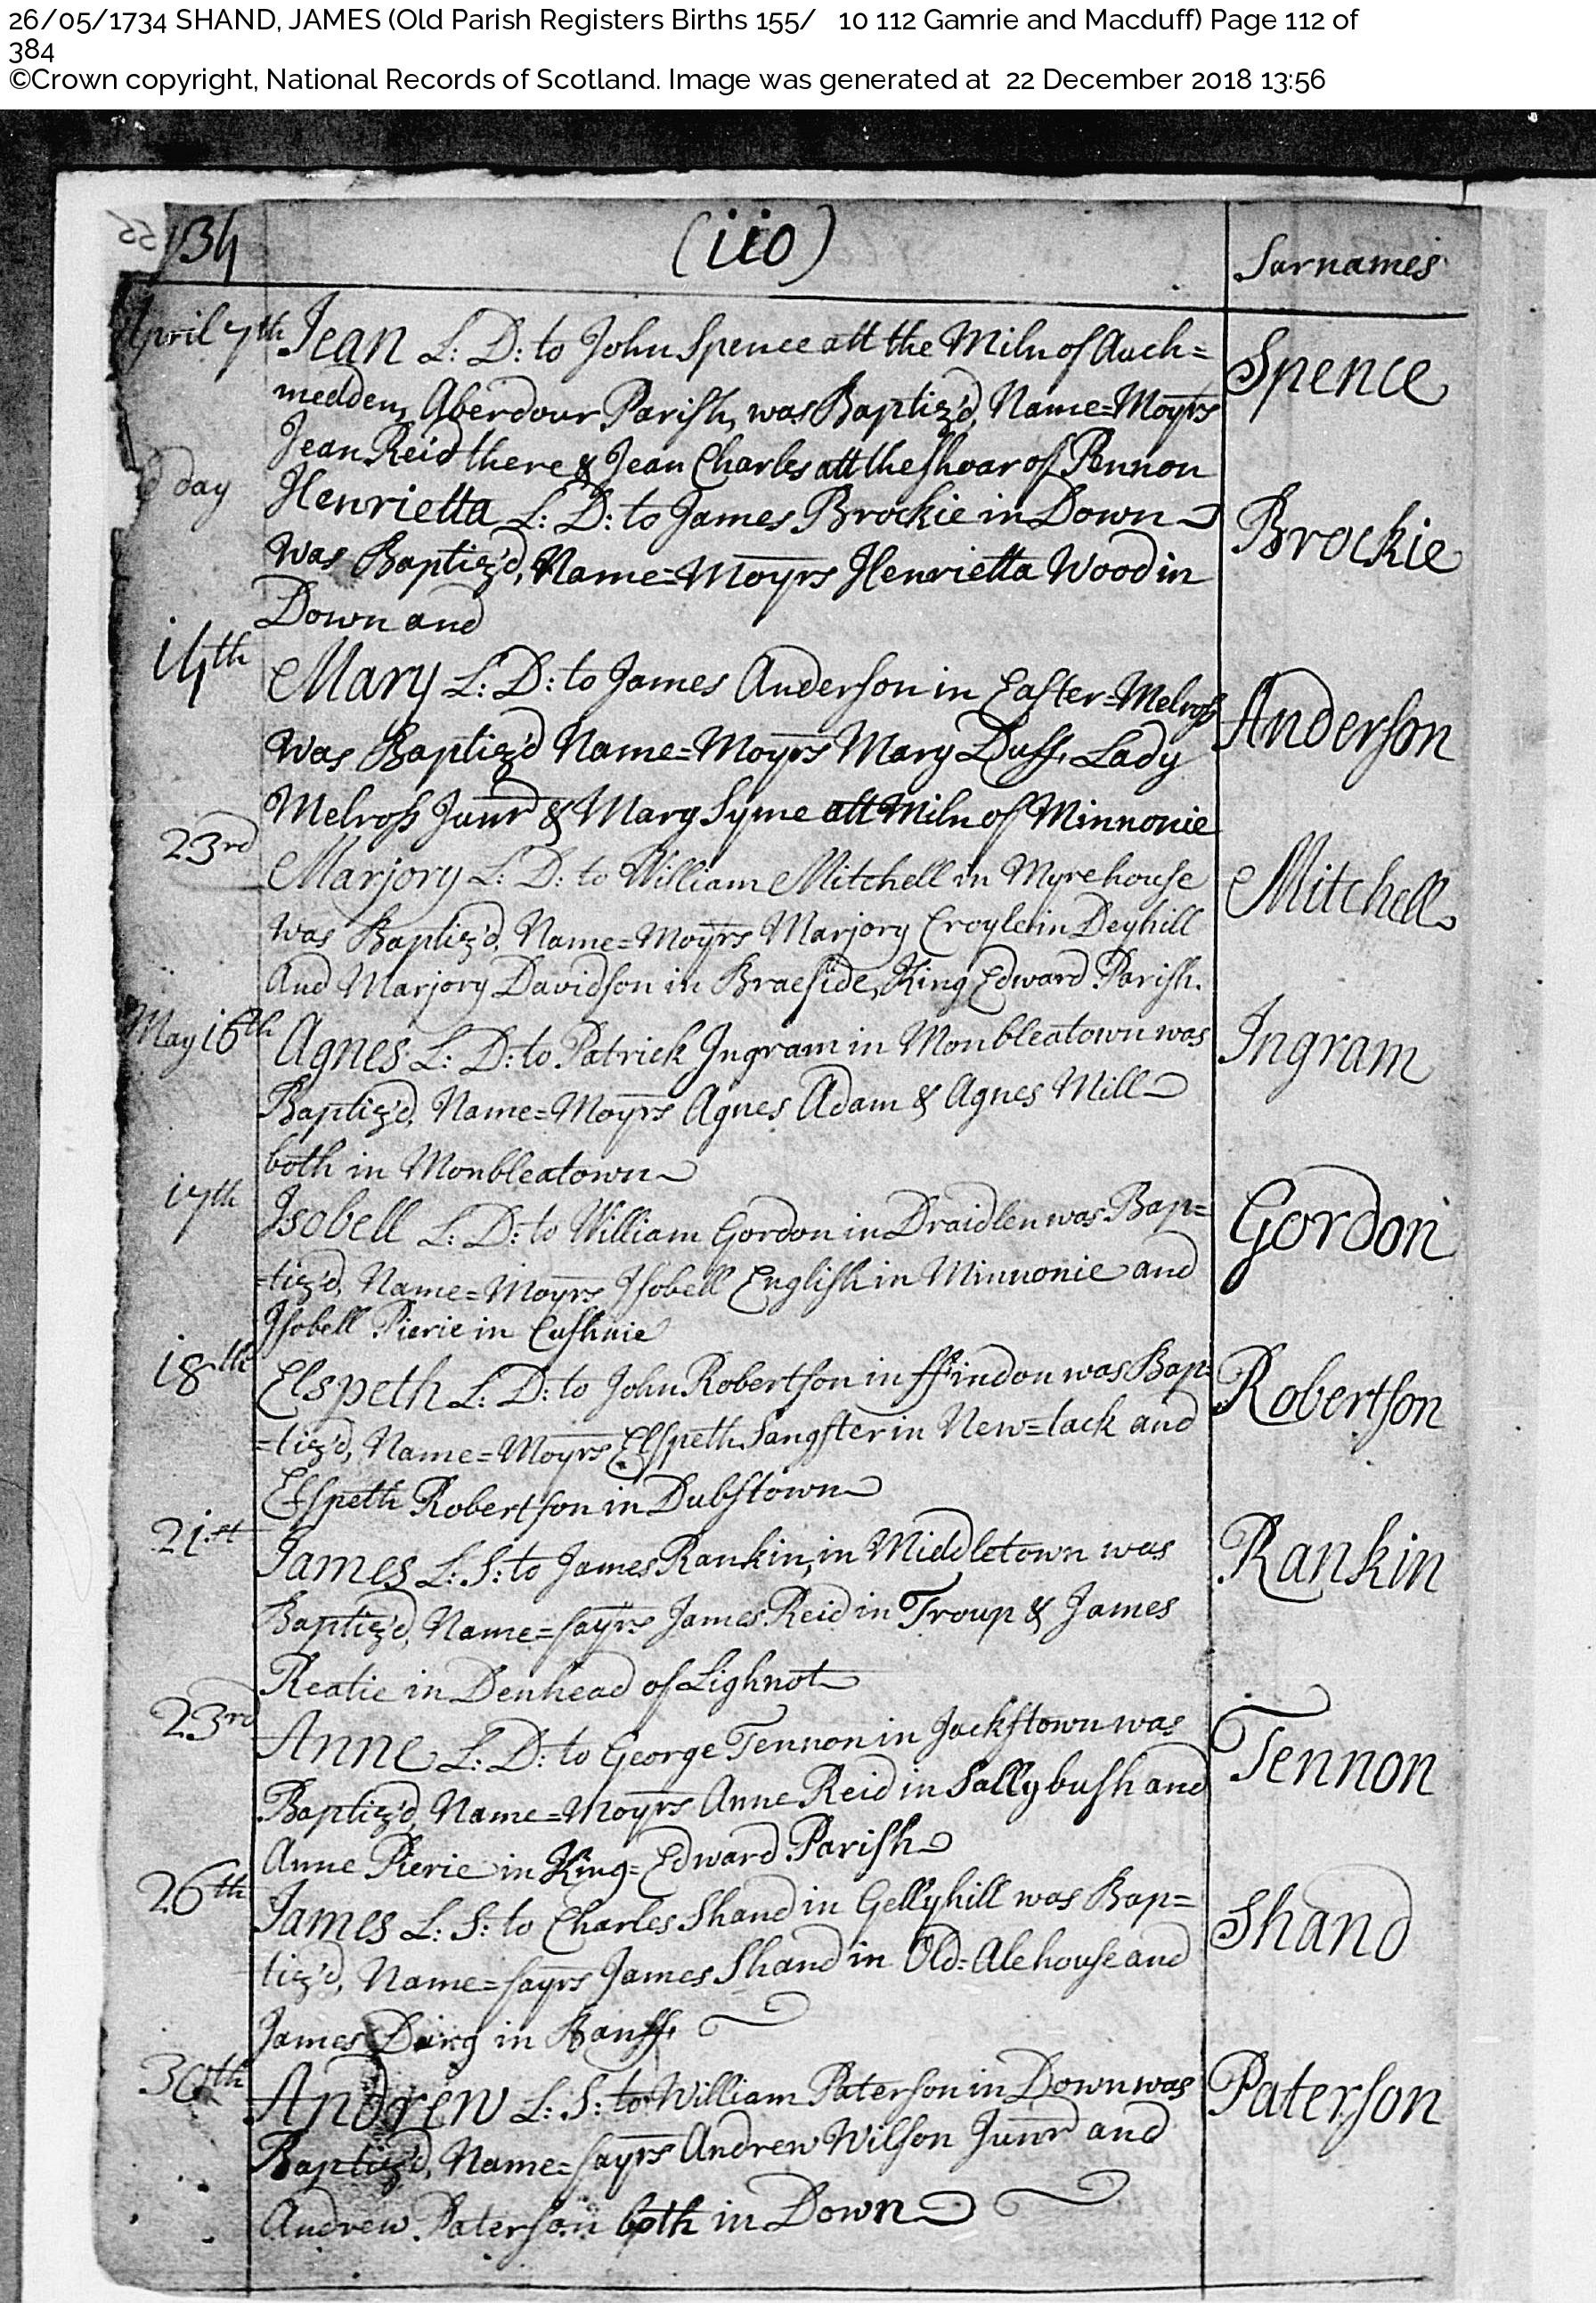 JamesShand_B1734 Gellyhill Banff, May 26, 1734